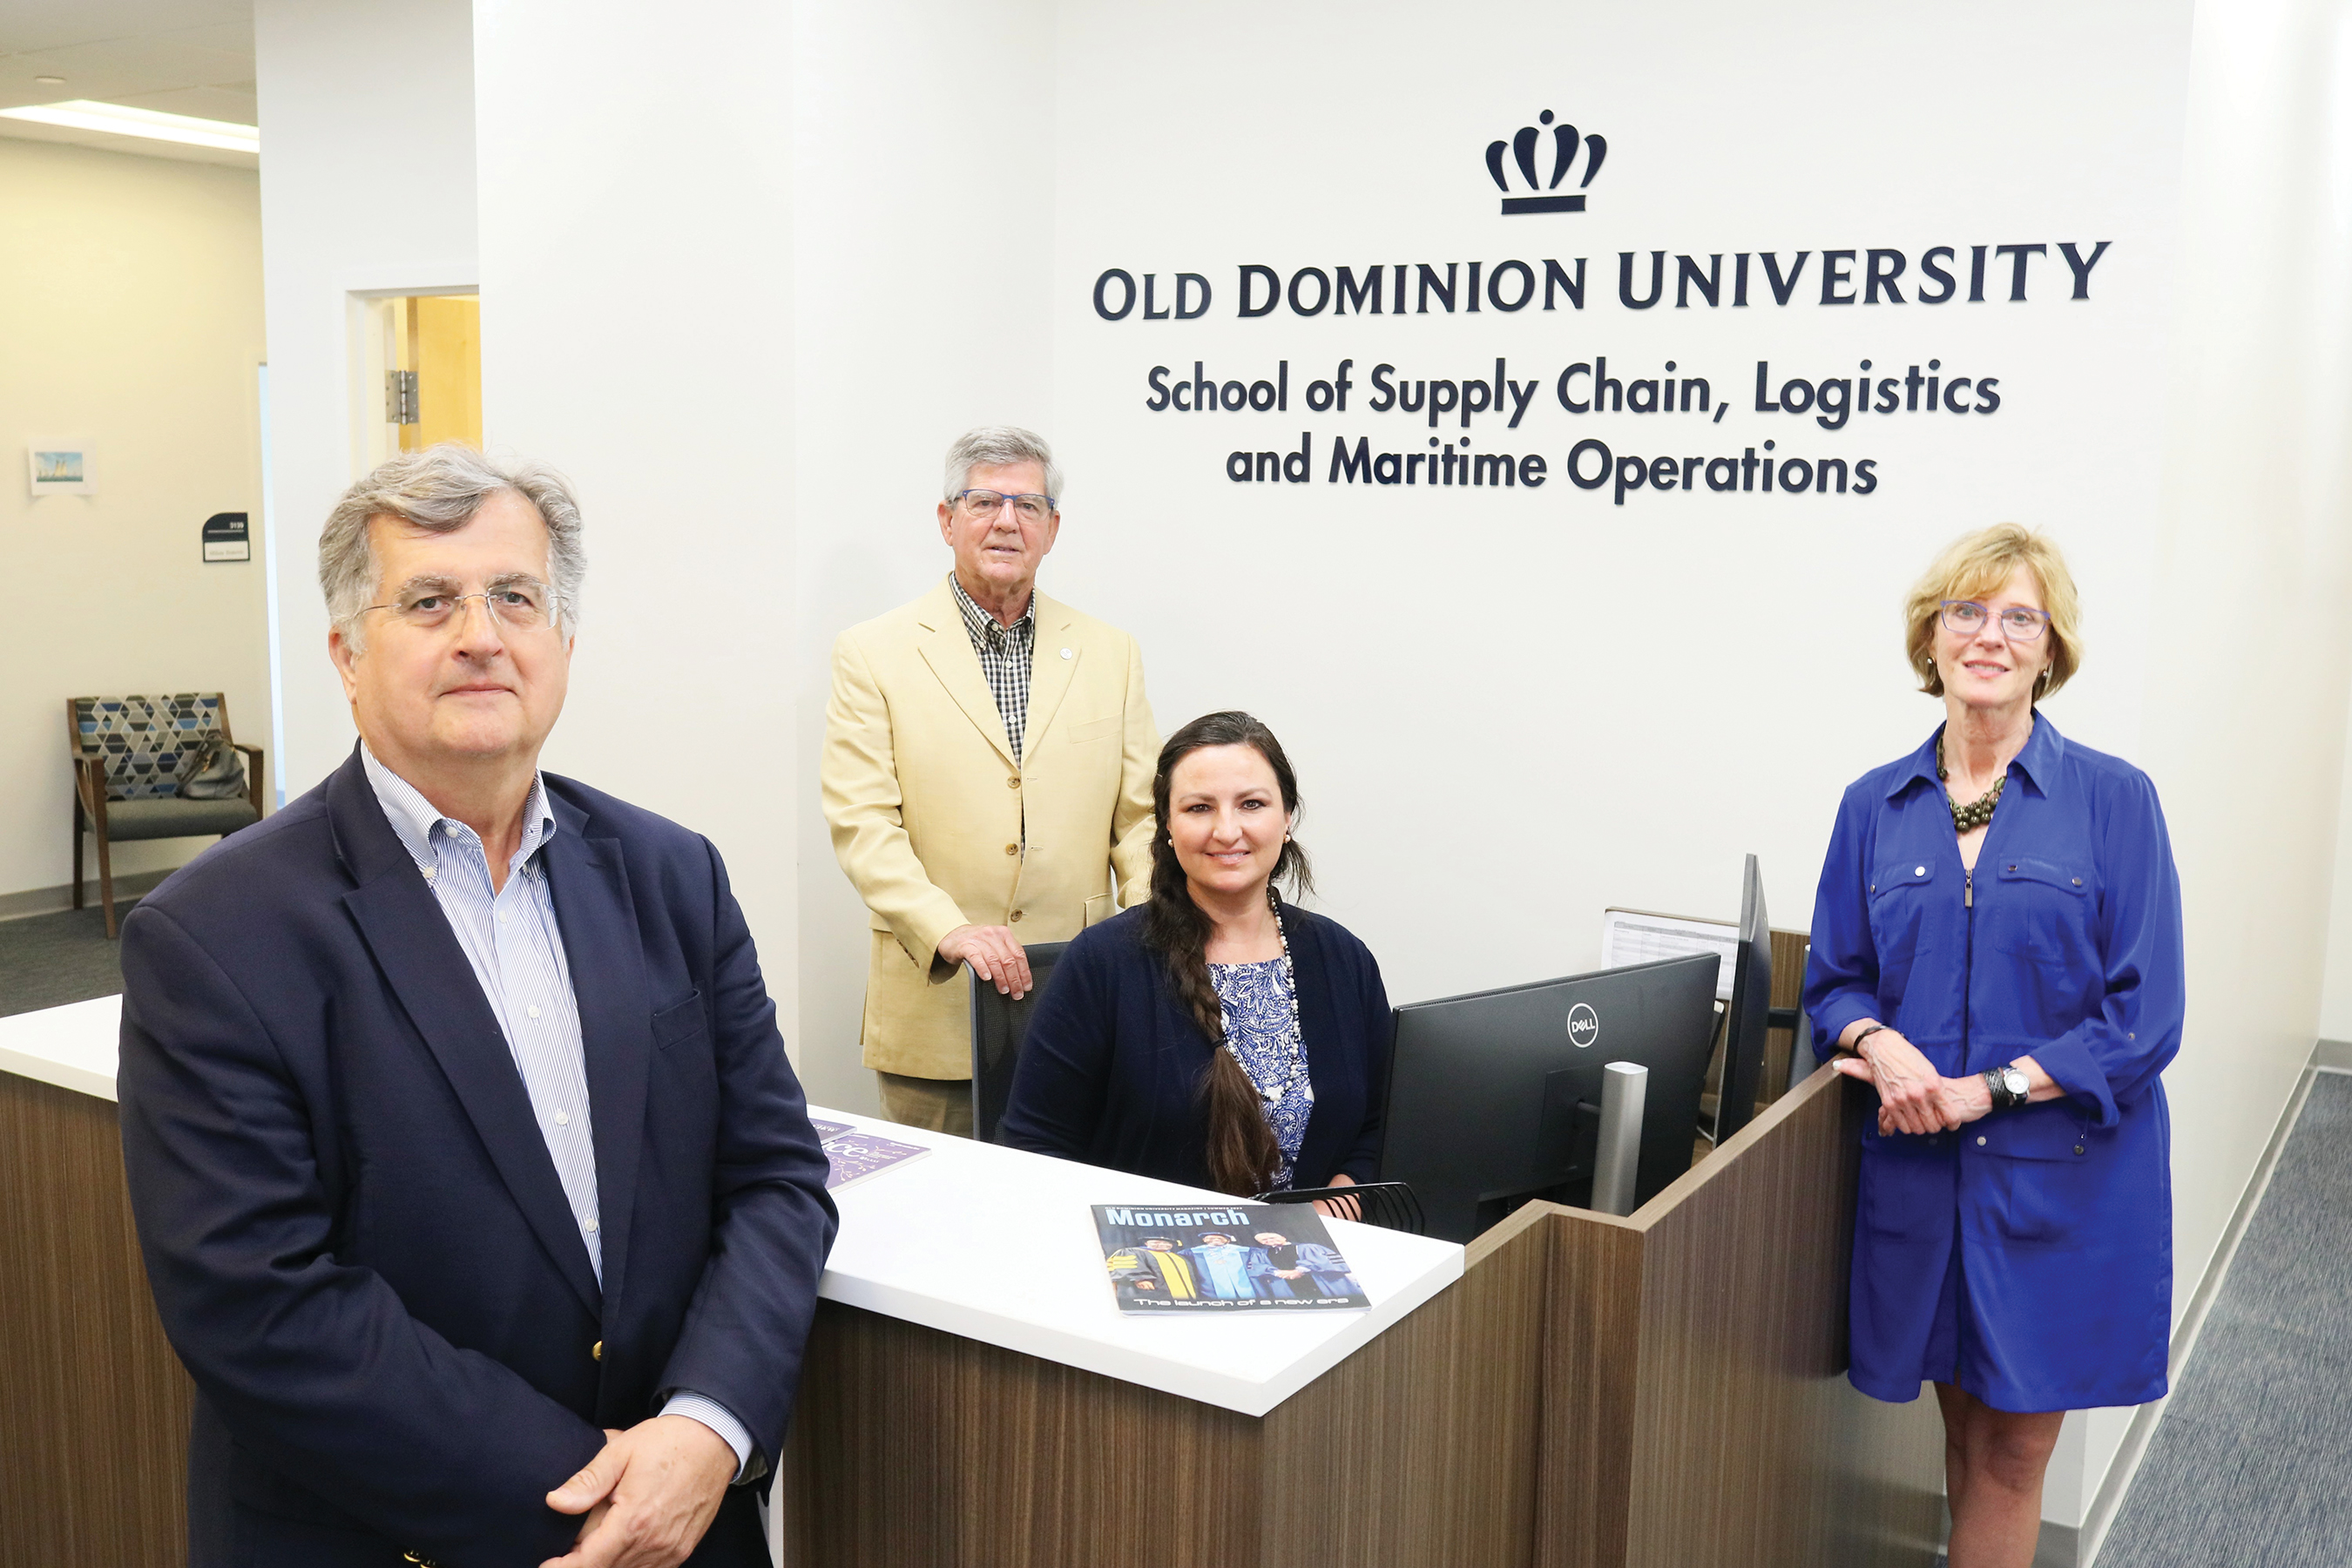 Old Dominion University Staff